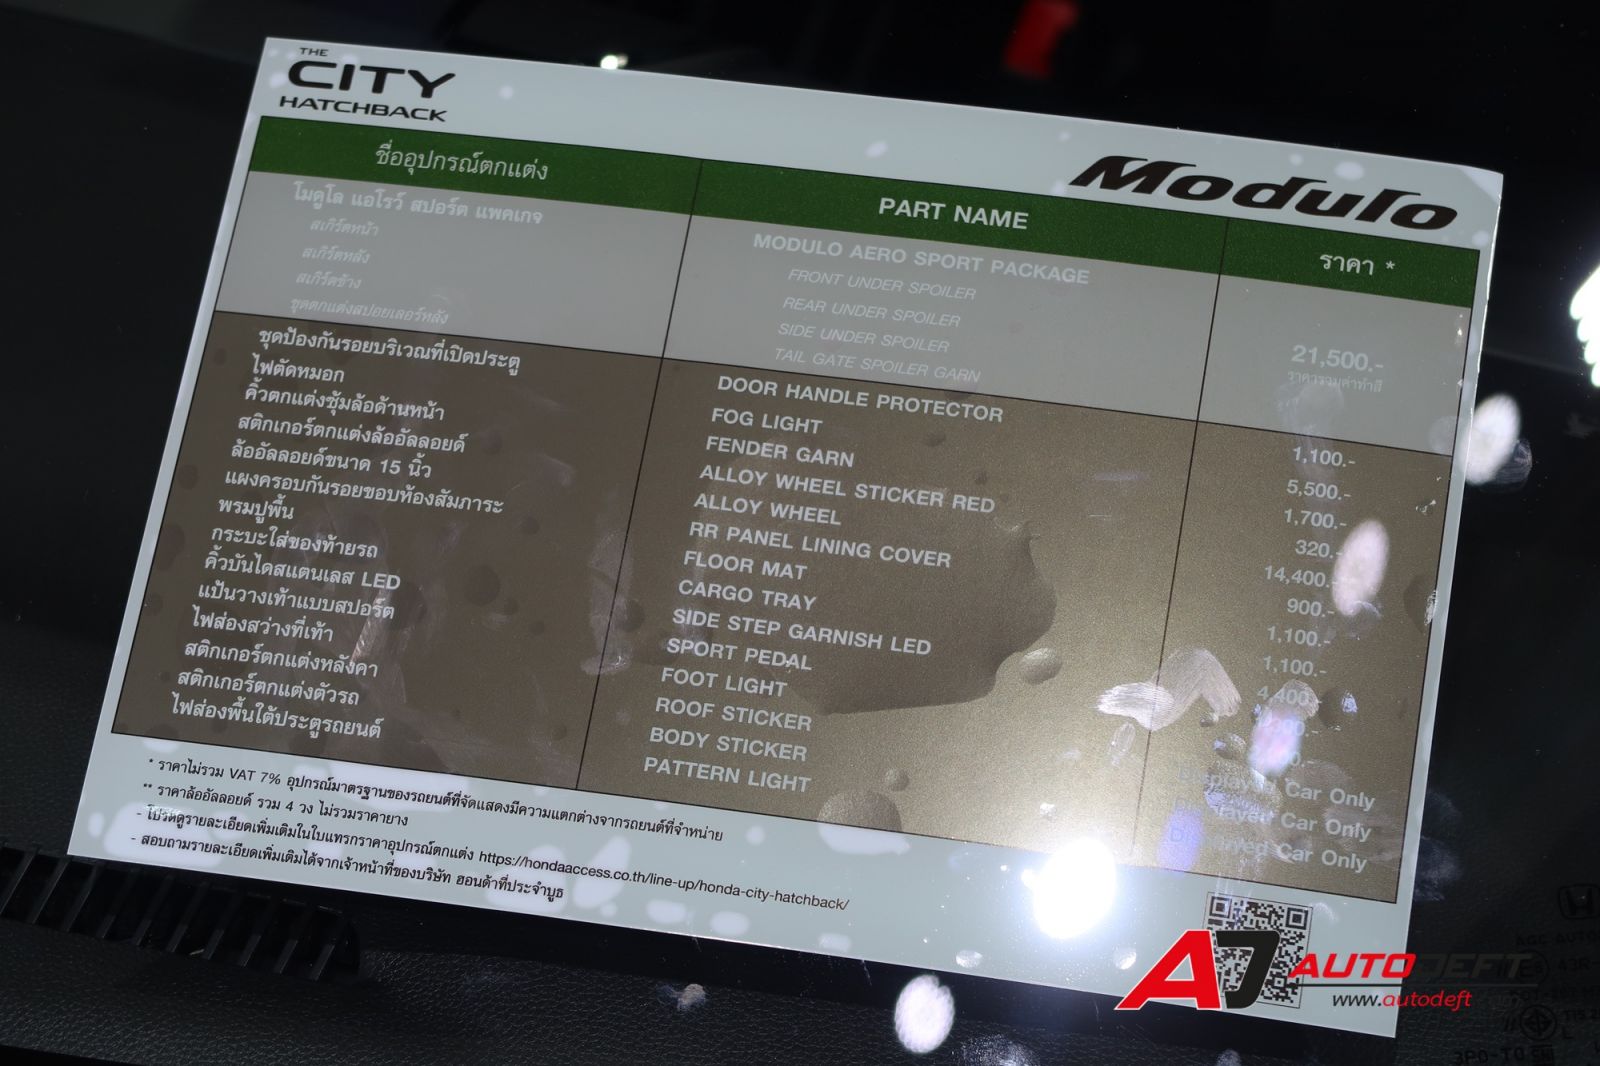 Honda City Hatchback with Modulo